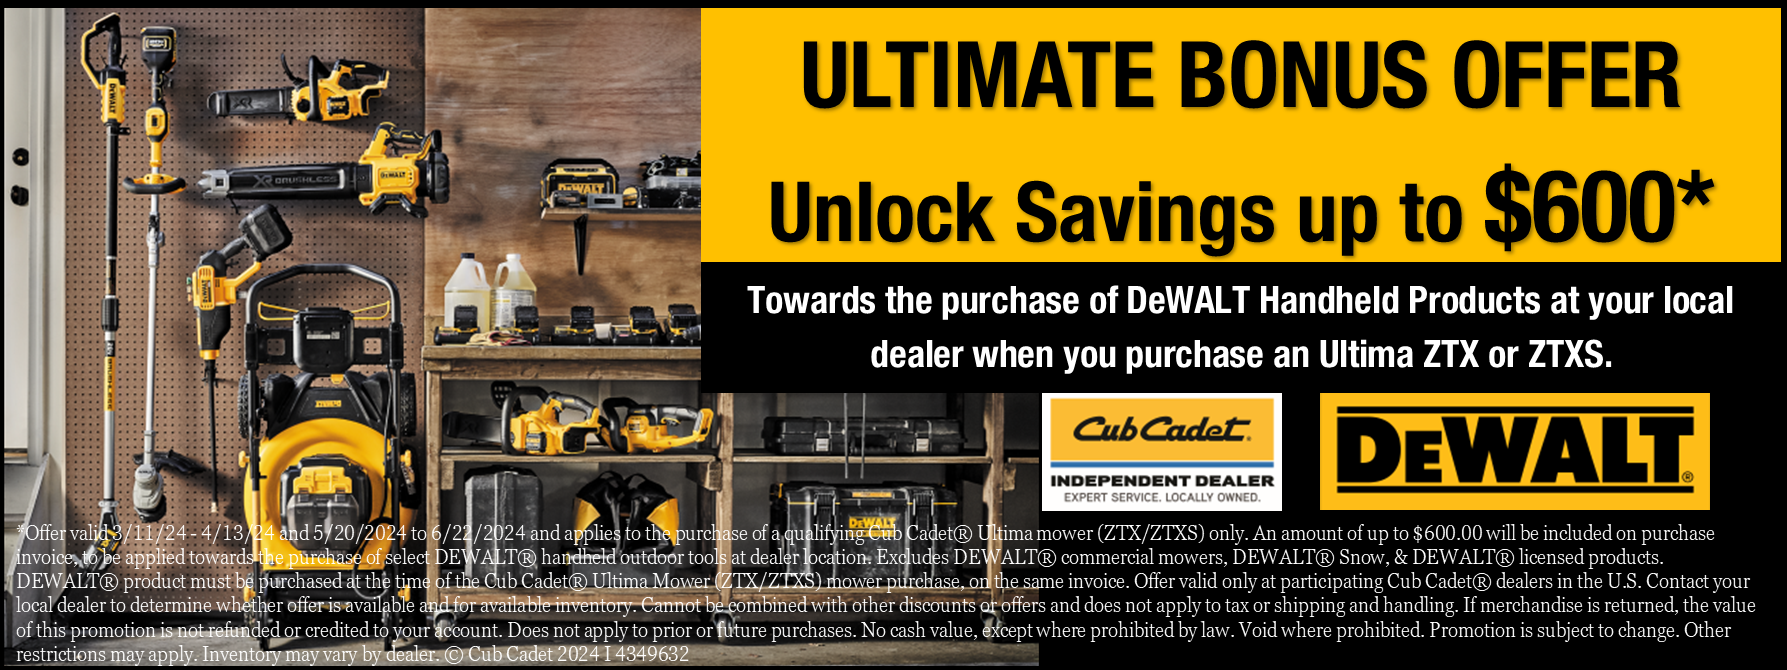 a dewalt advertisement that says ultimate bonus offer unlock savings up to $ 600